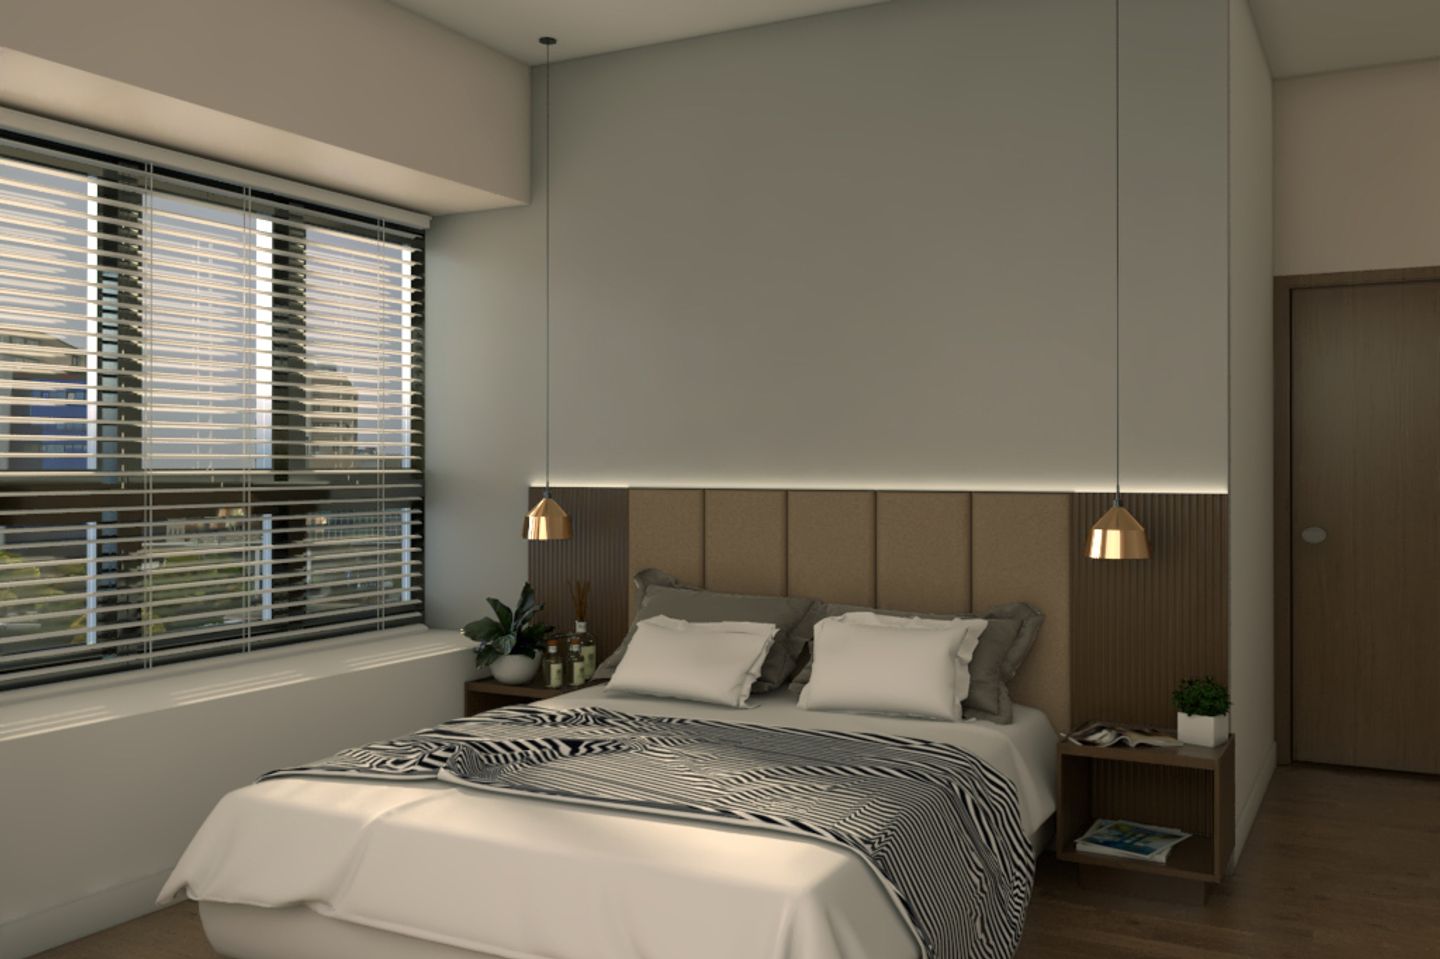 Large Window Spacious Bedroom Interior Design with Wooden Floor - Livspace